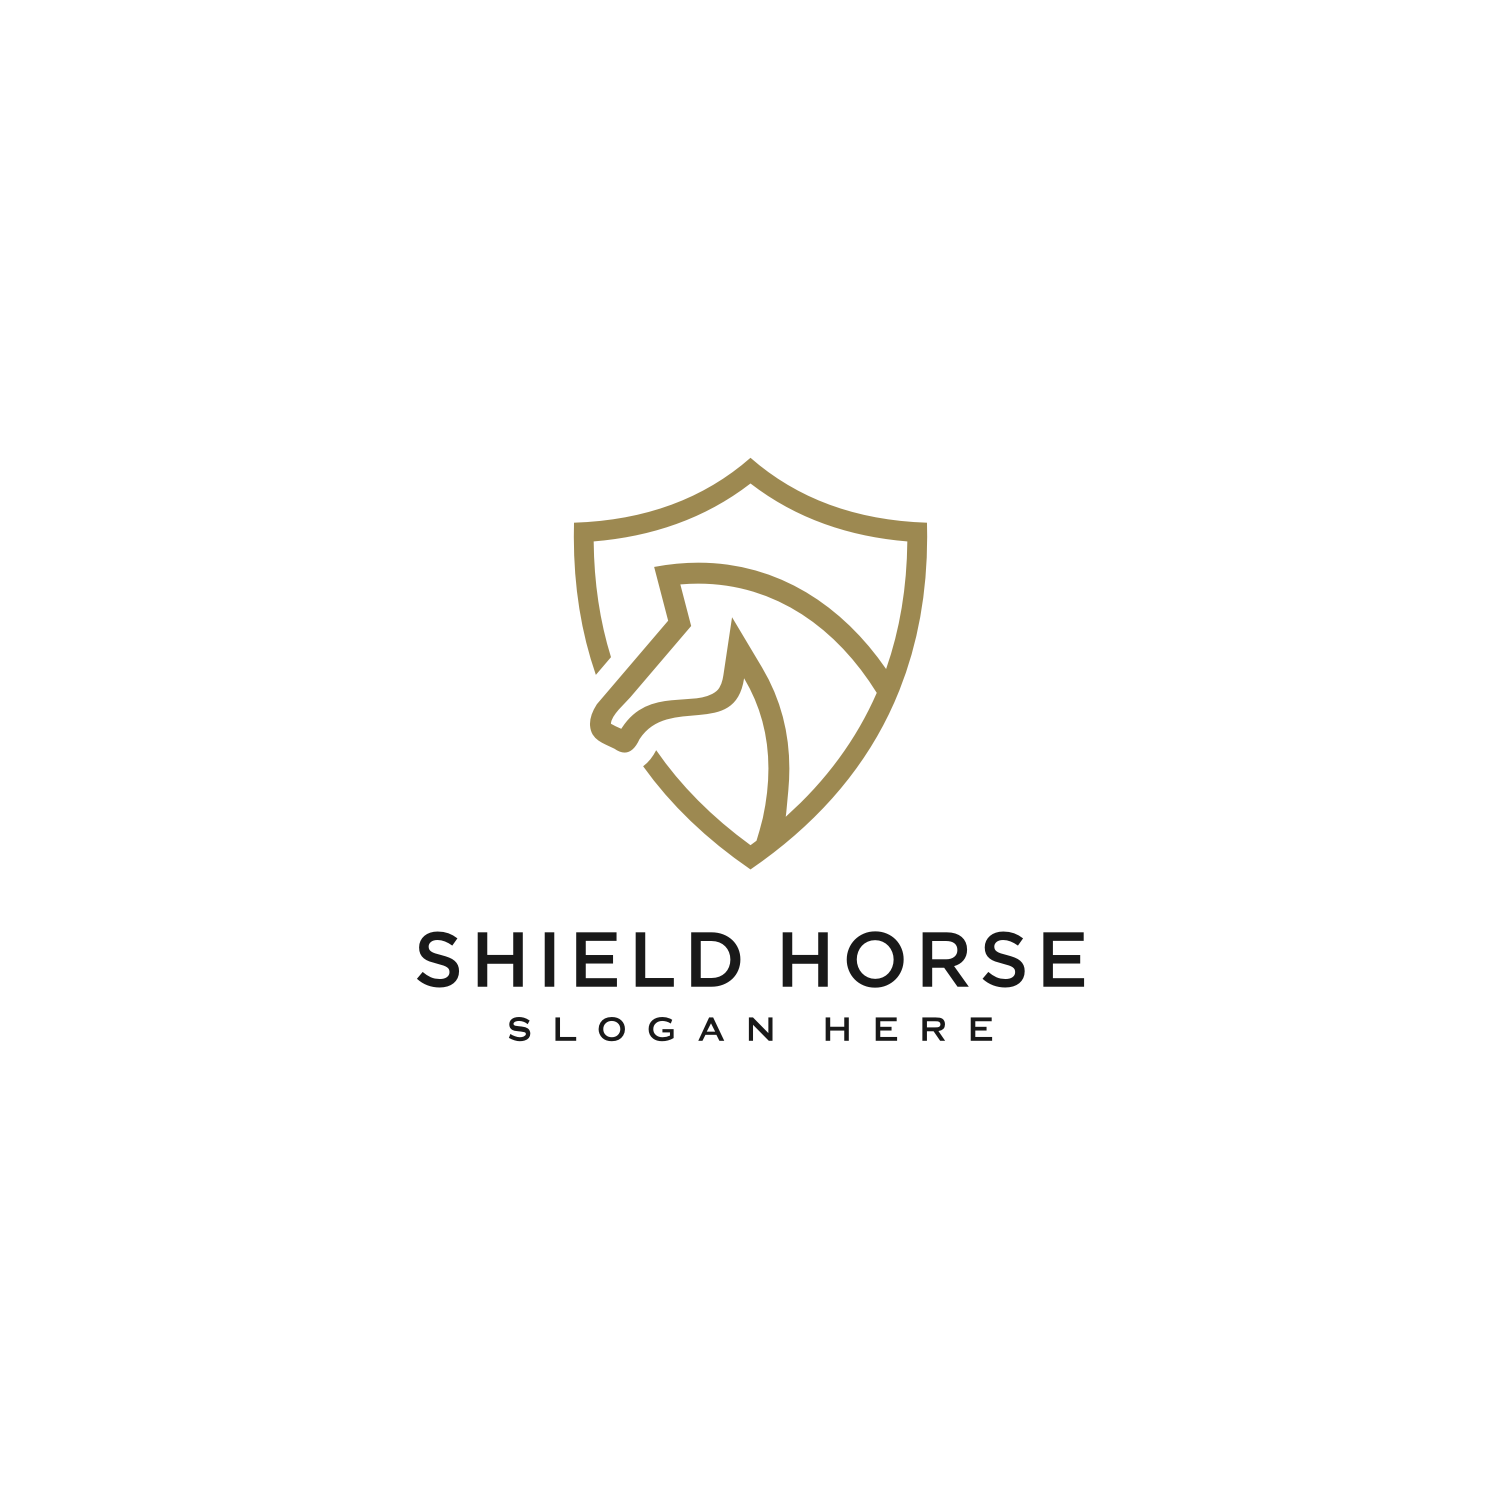 2 Head Horse And Shield Logo Vector.